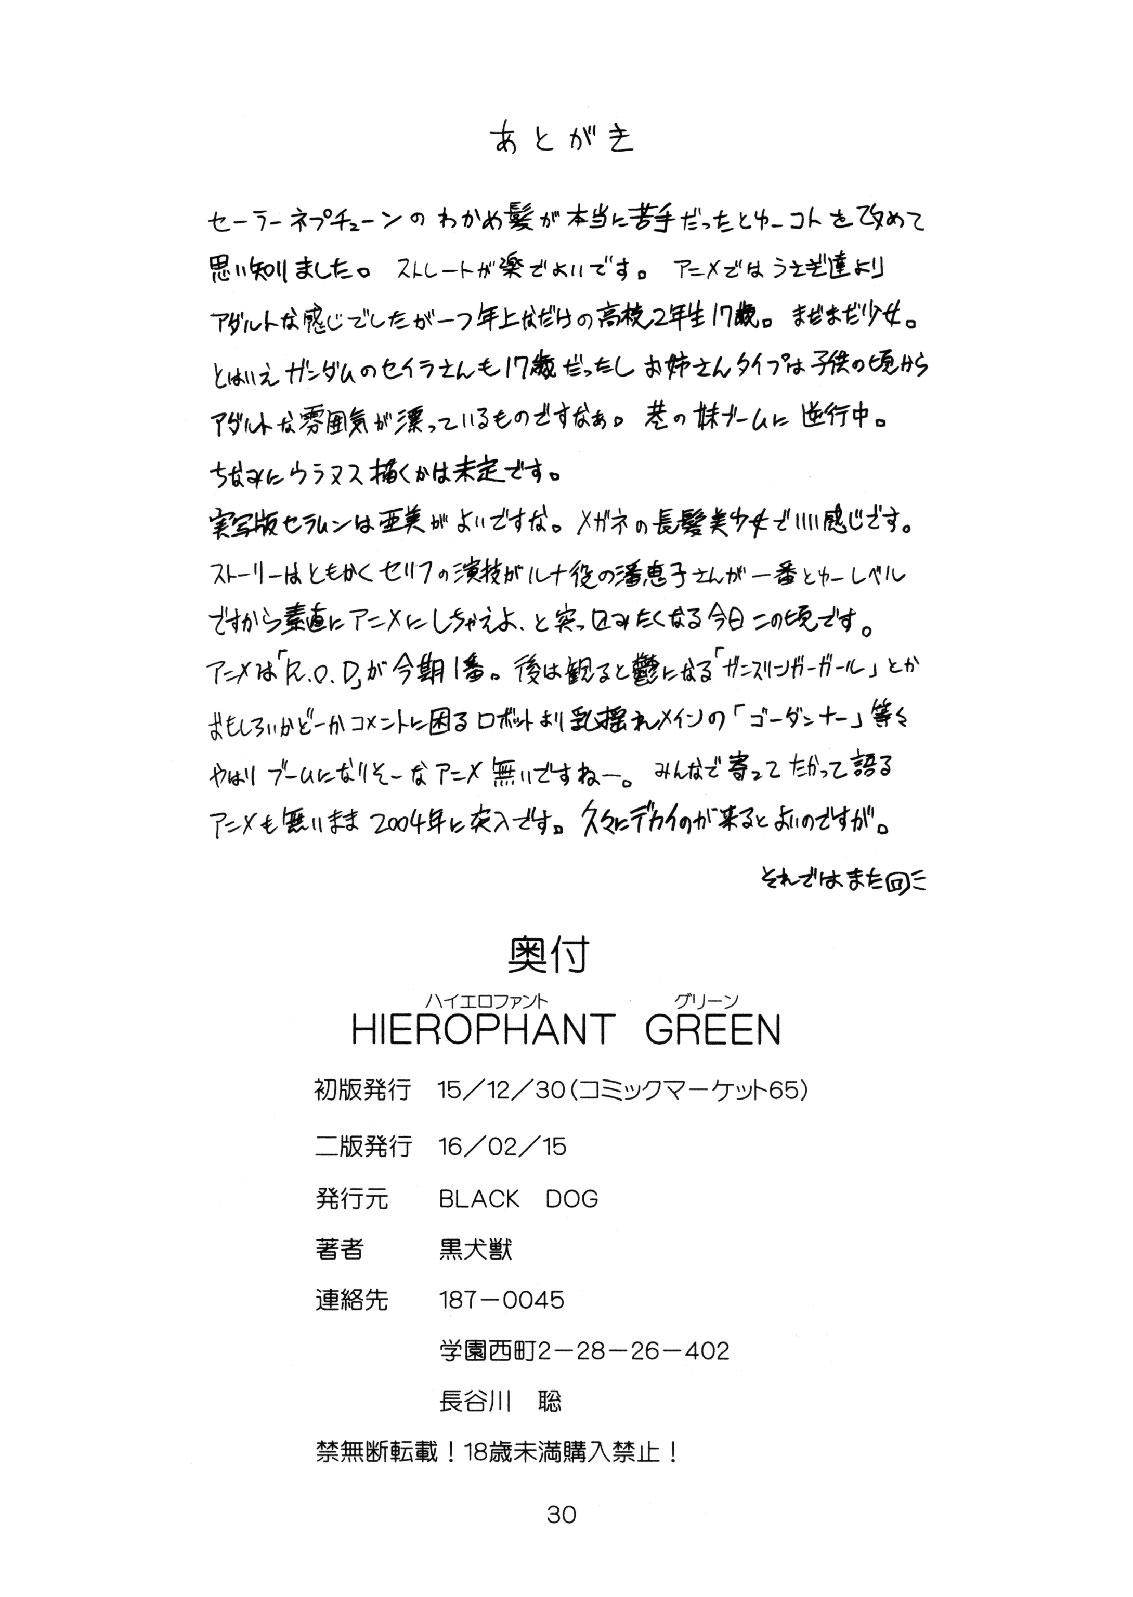 Hierophant Green 28